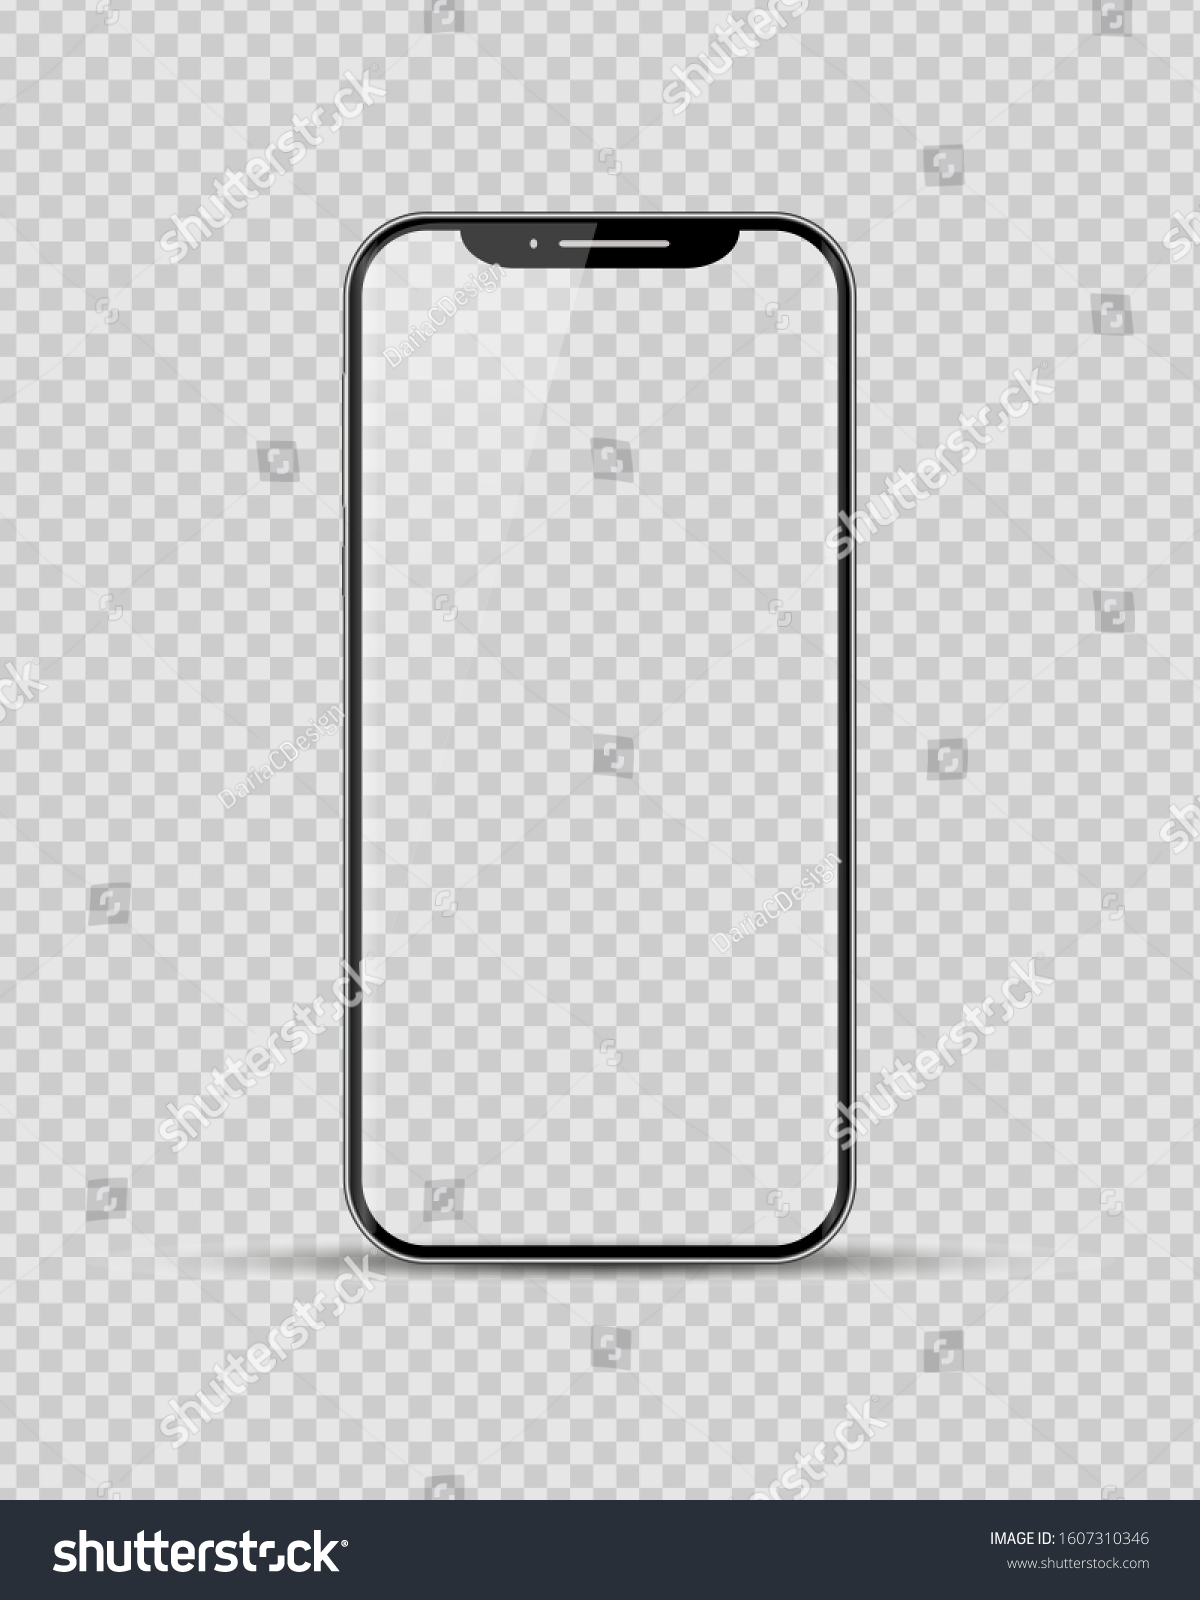 428 Iphone mockup transparent Images, Stock Photos & Vectors | Shutterstock